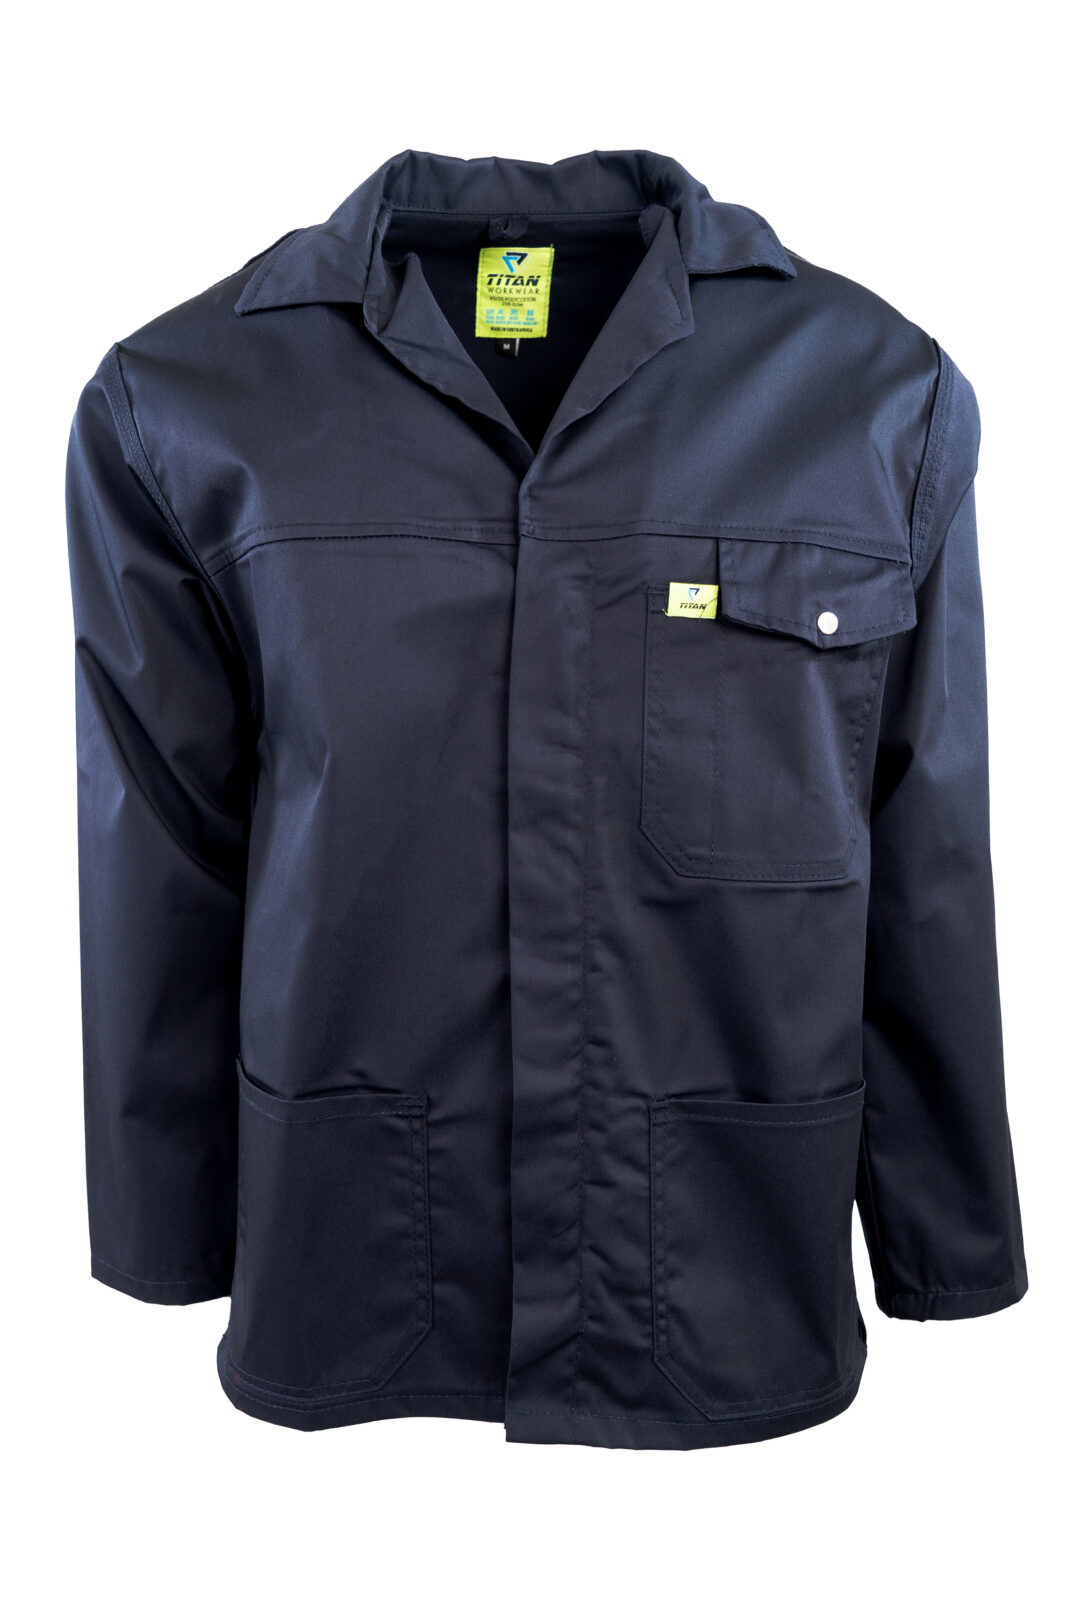 Titan Workwear Navy Blue Conti Jacket - Santon Workwear